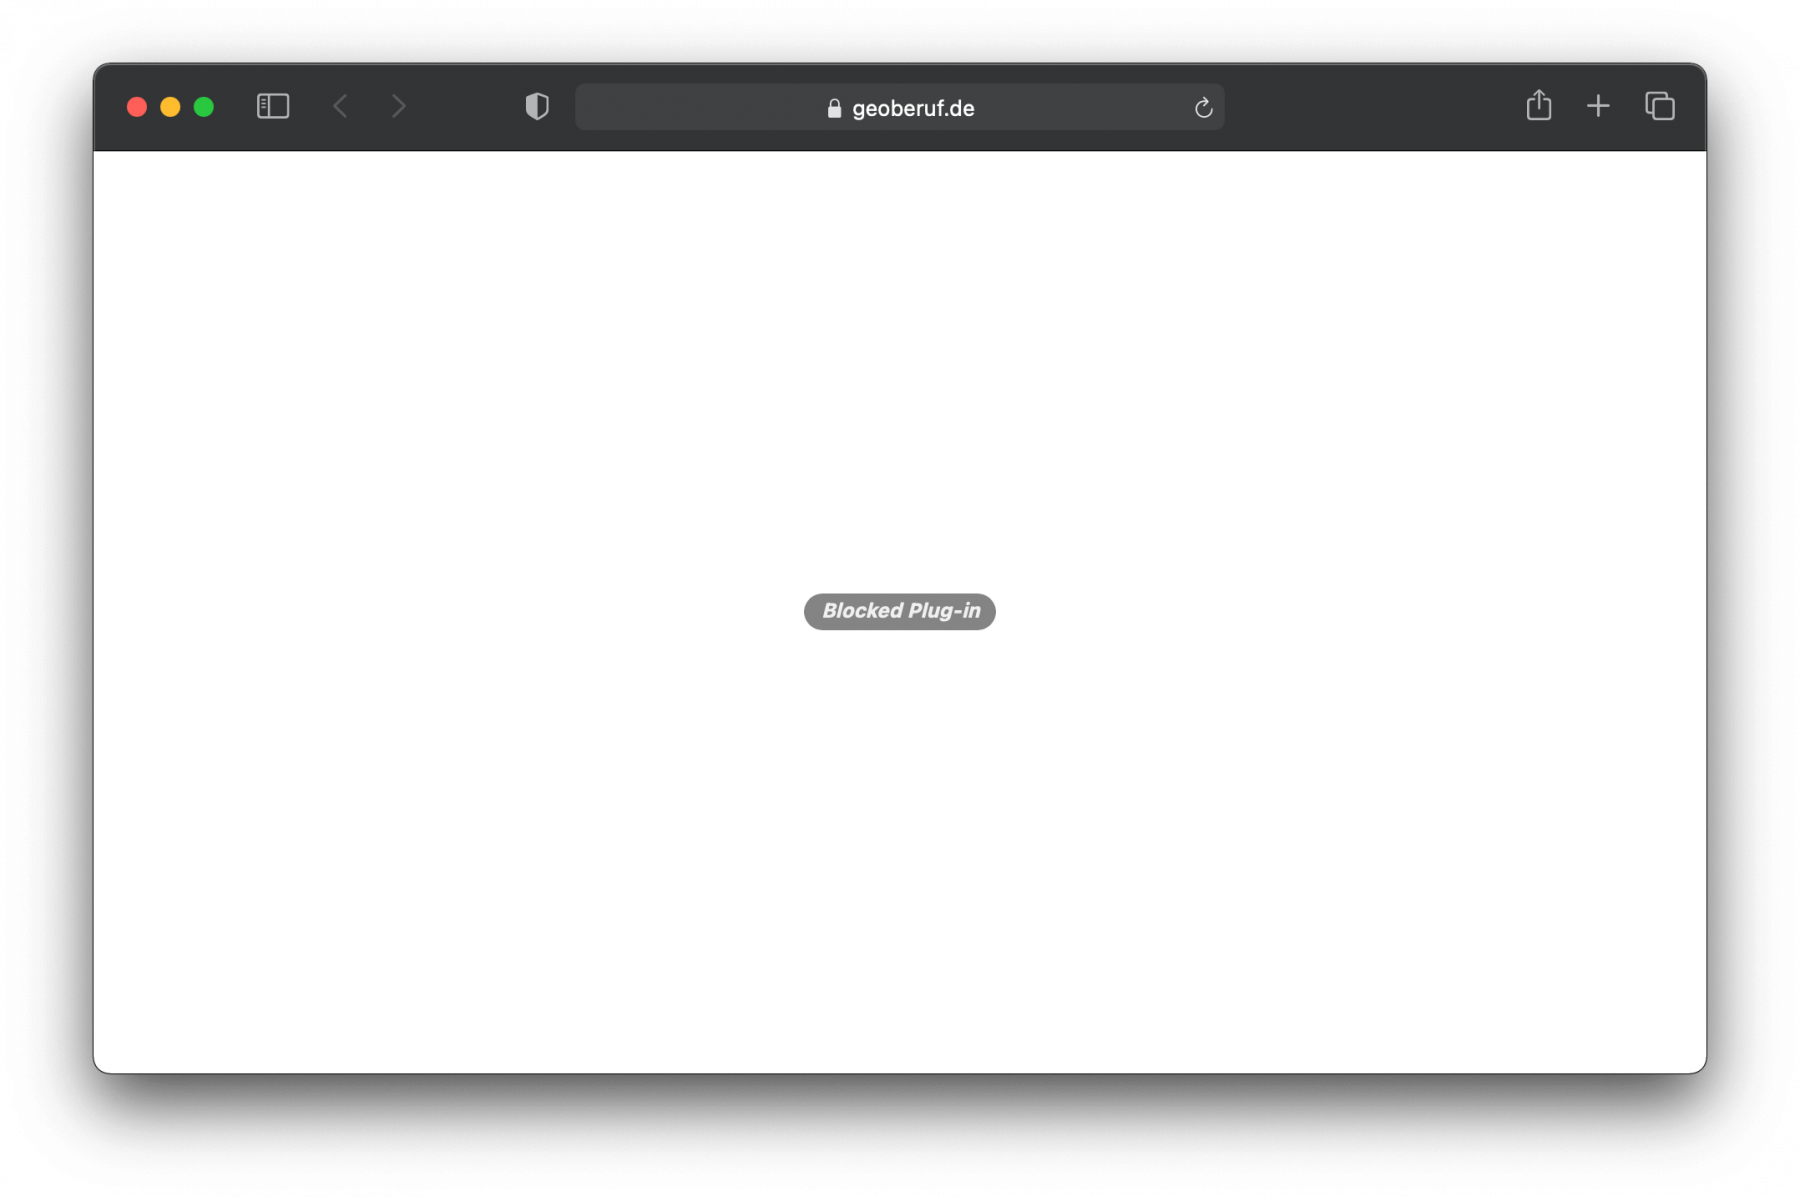 ‘Blocked Plug-in’ error in Safari